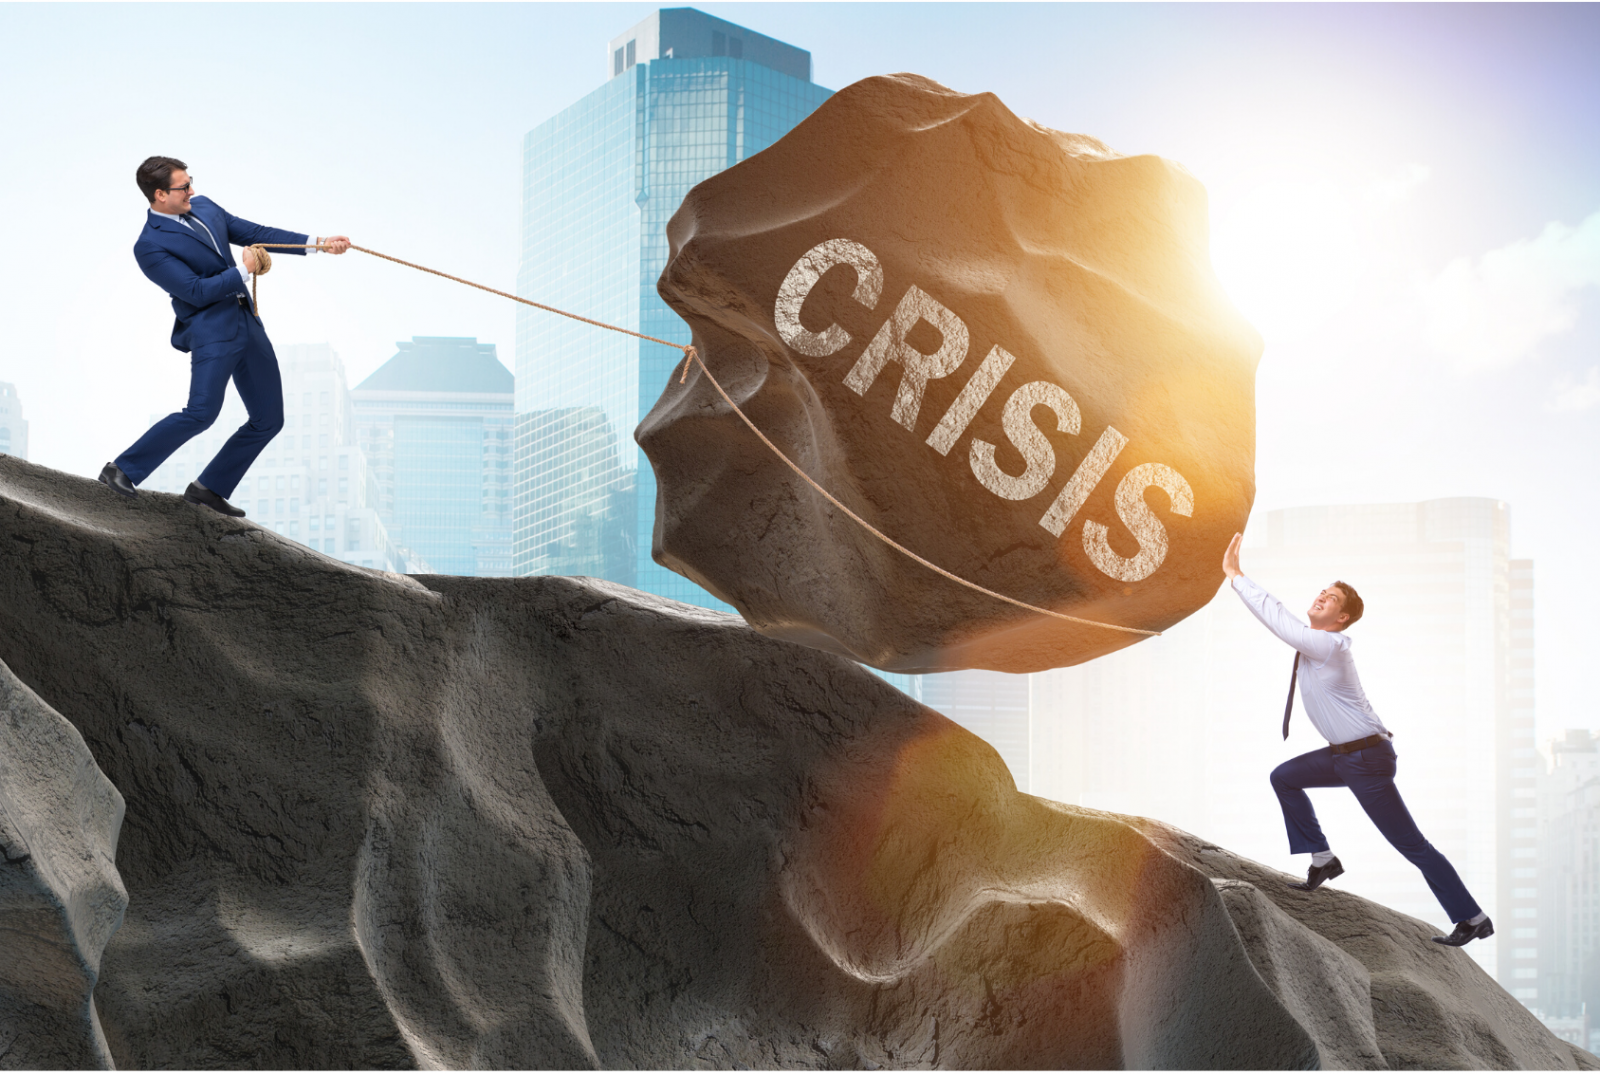 ¿Crisis económica mundial?, "Lo peor está por venir": Fondo Monetario Internacional 